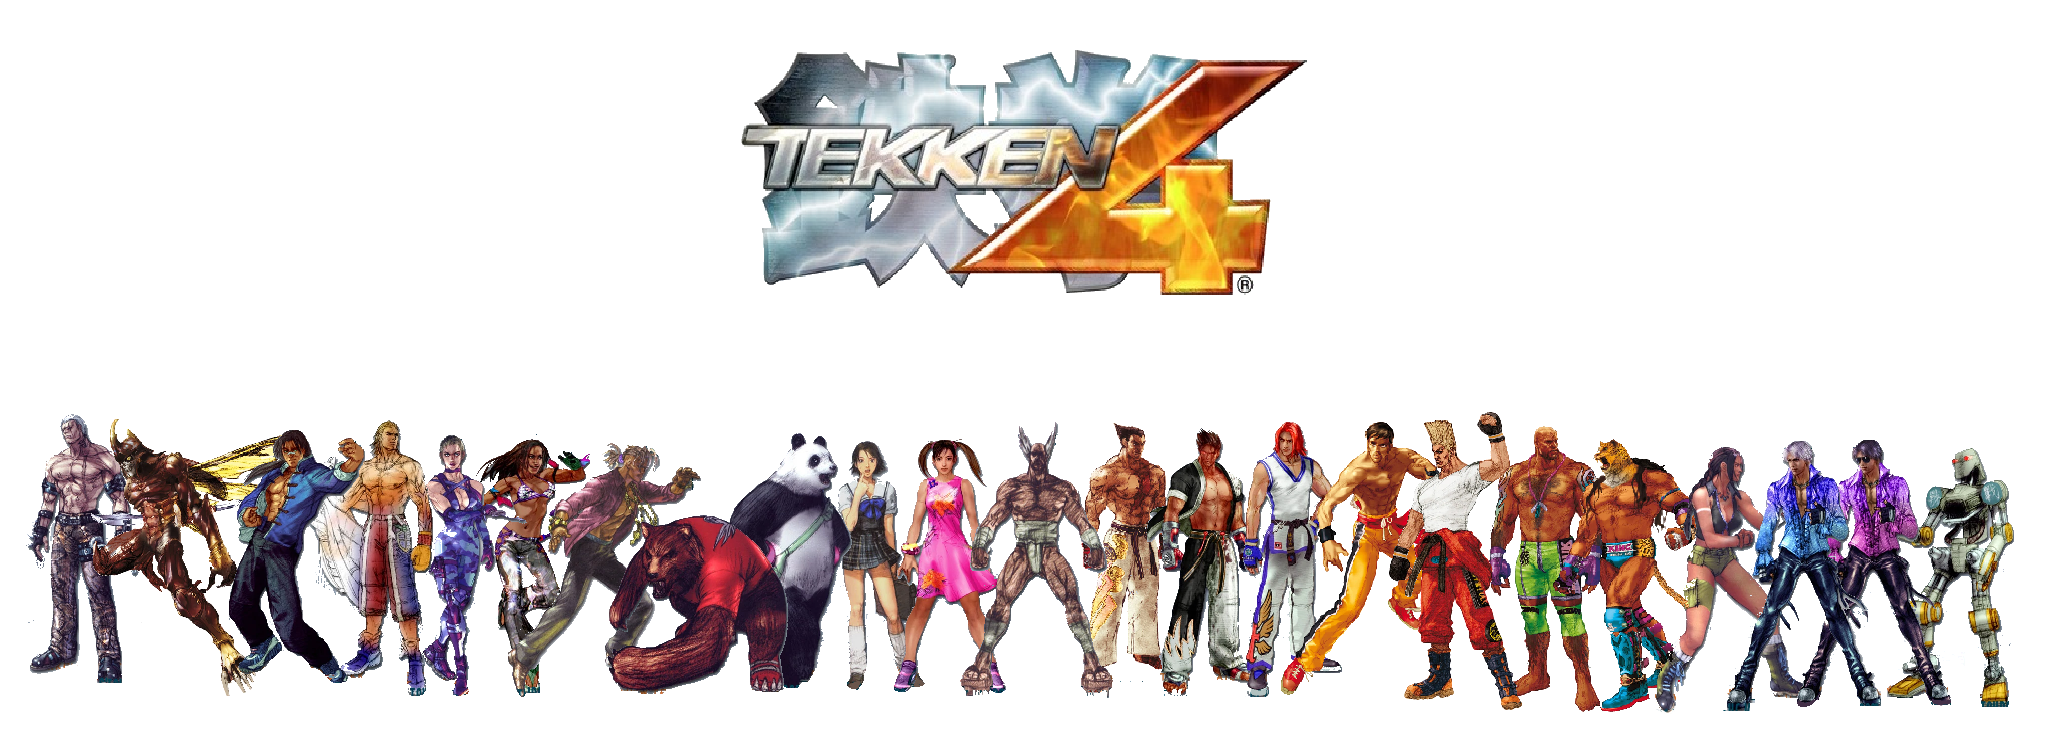 Tekken 4(2001)- Launch Roster. : r/Tekken